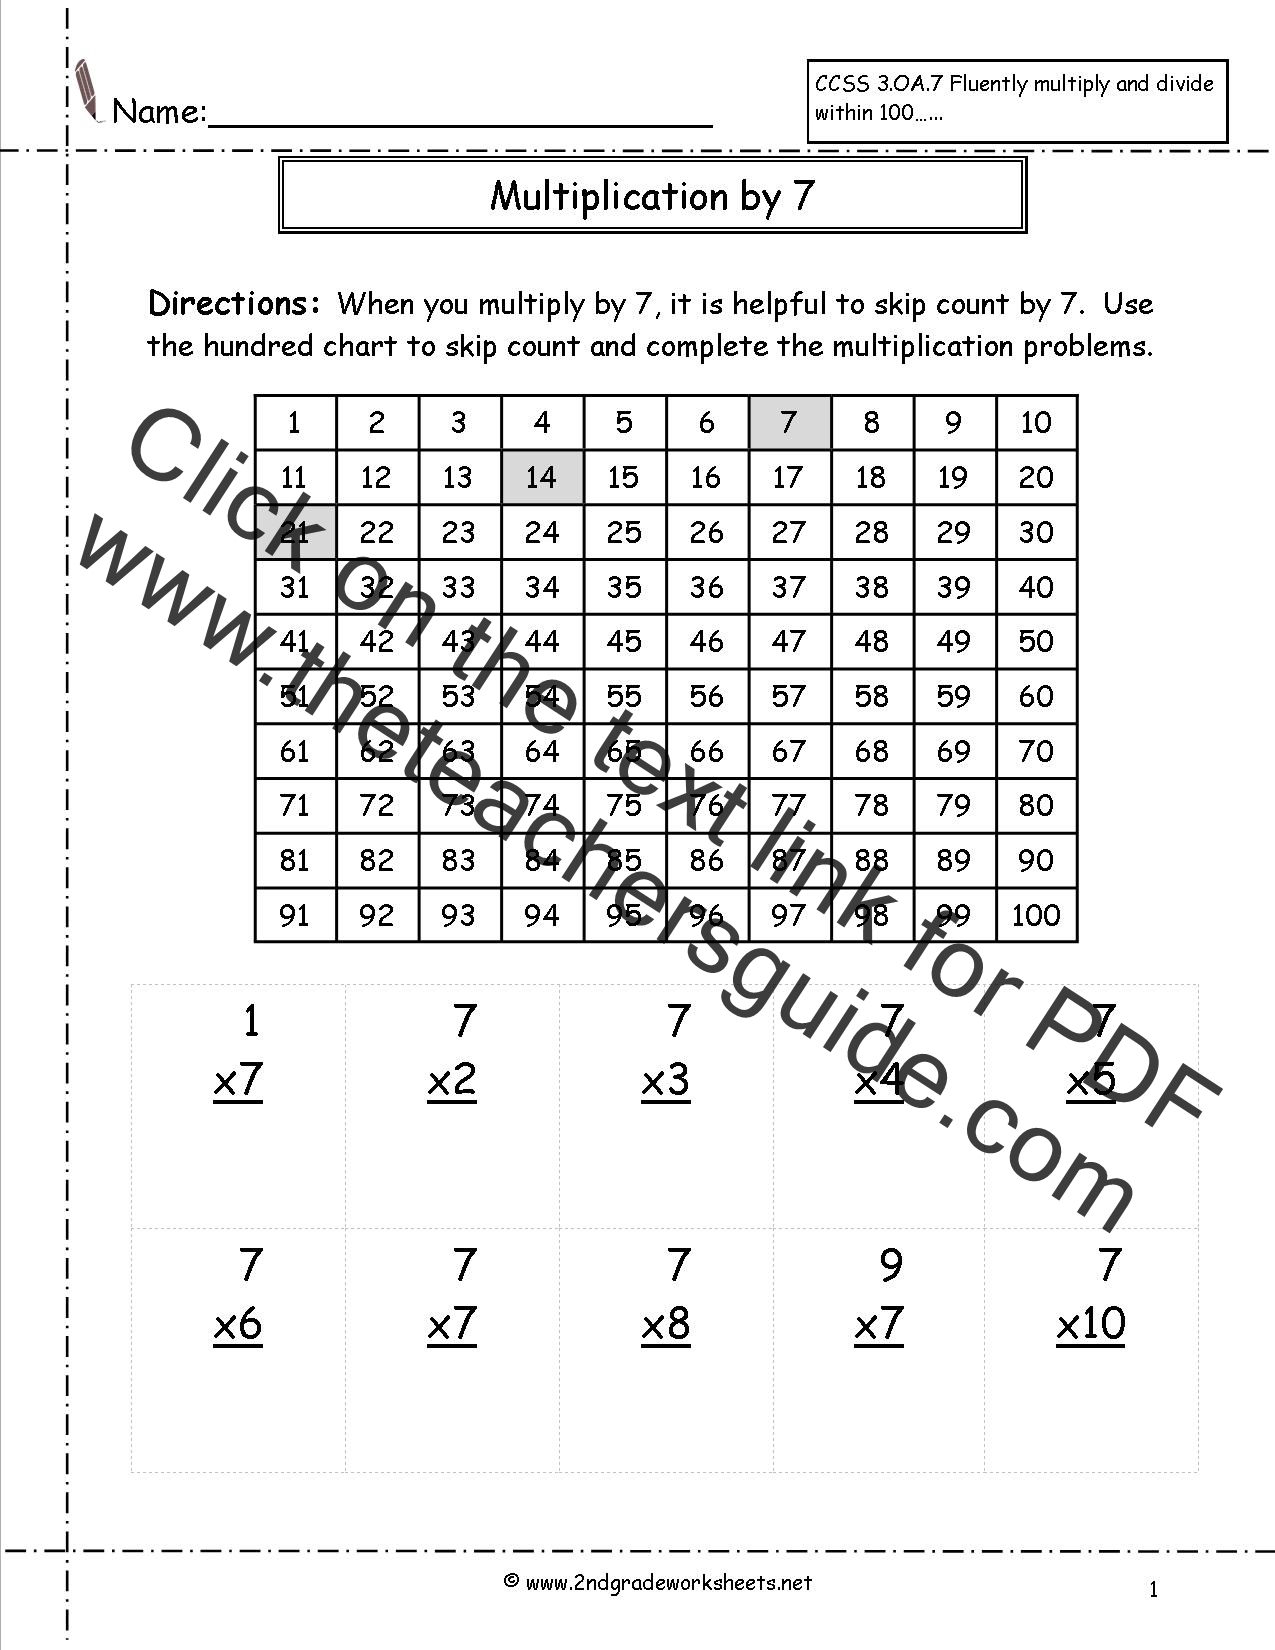 free-printable-maths-worksheets-ks2-multiplication-maths-worksheets-ks2-free-printable-math